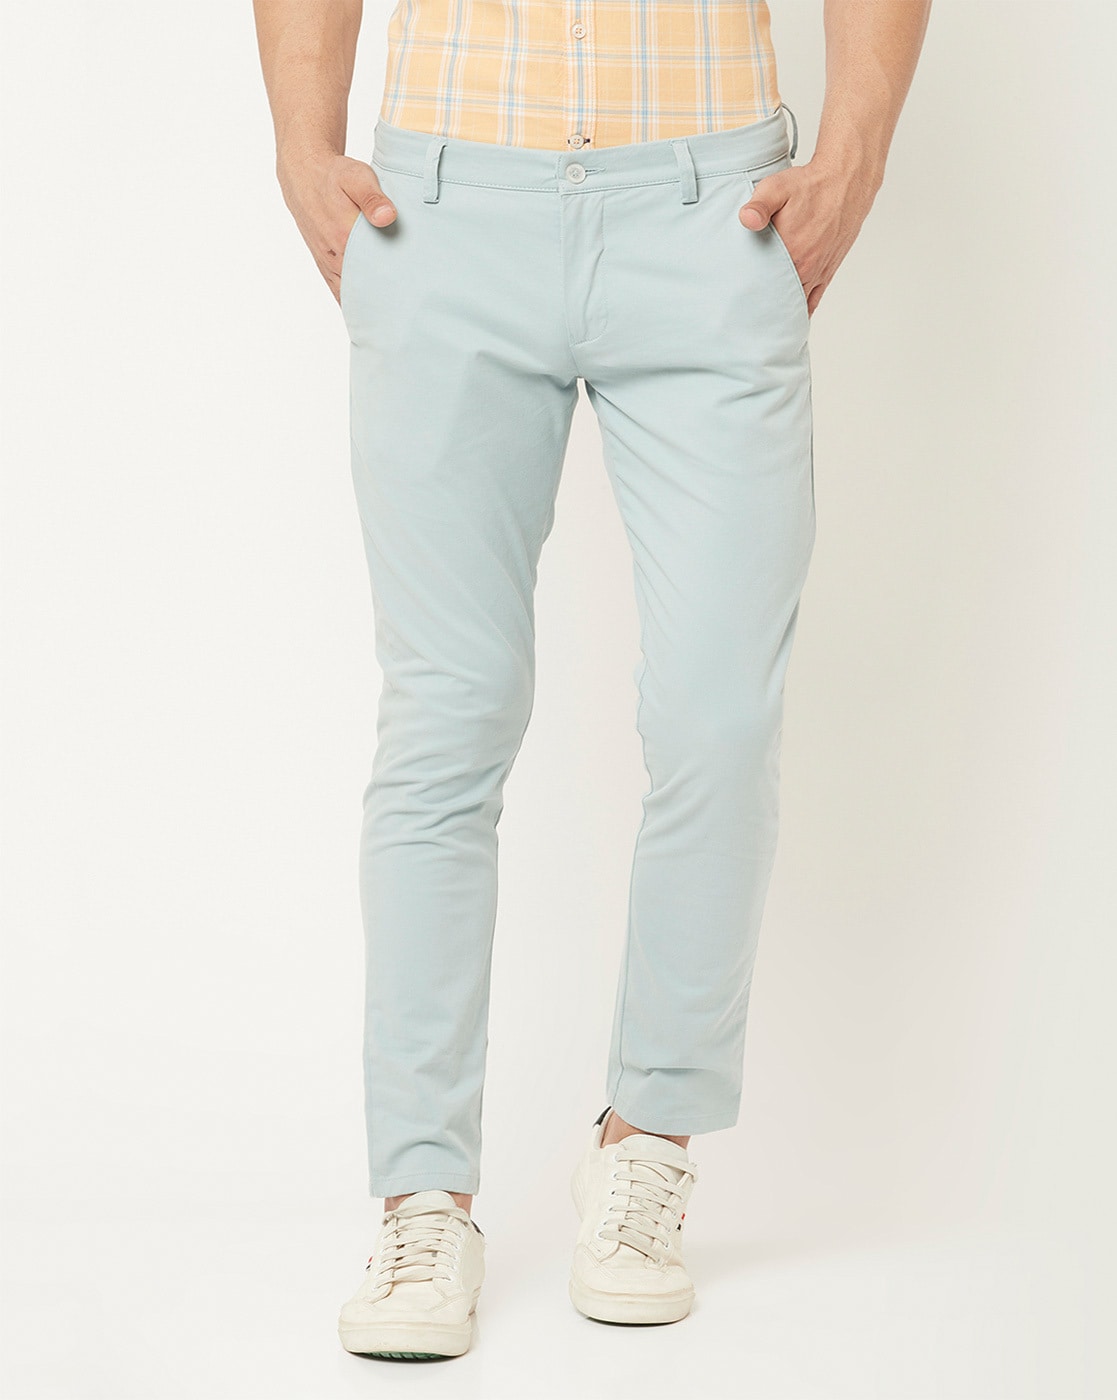 Buy Blue Trousers  Pants for Men by Crimsoune club Online  Ajiocom